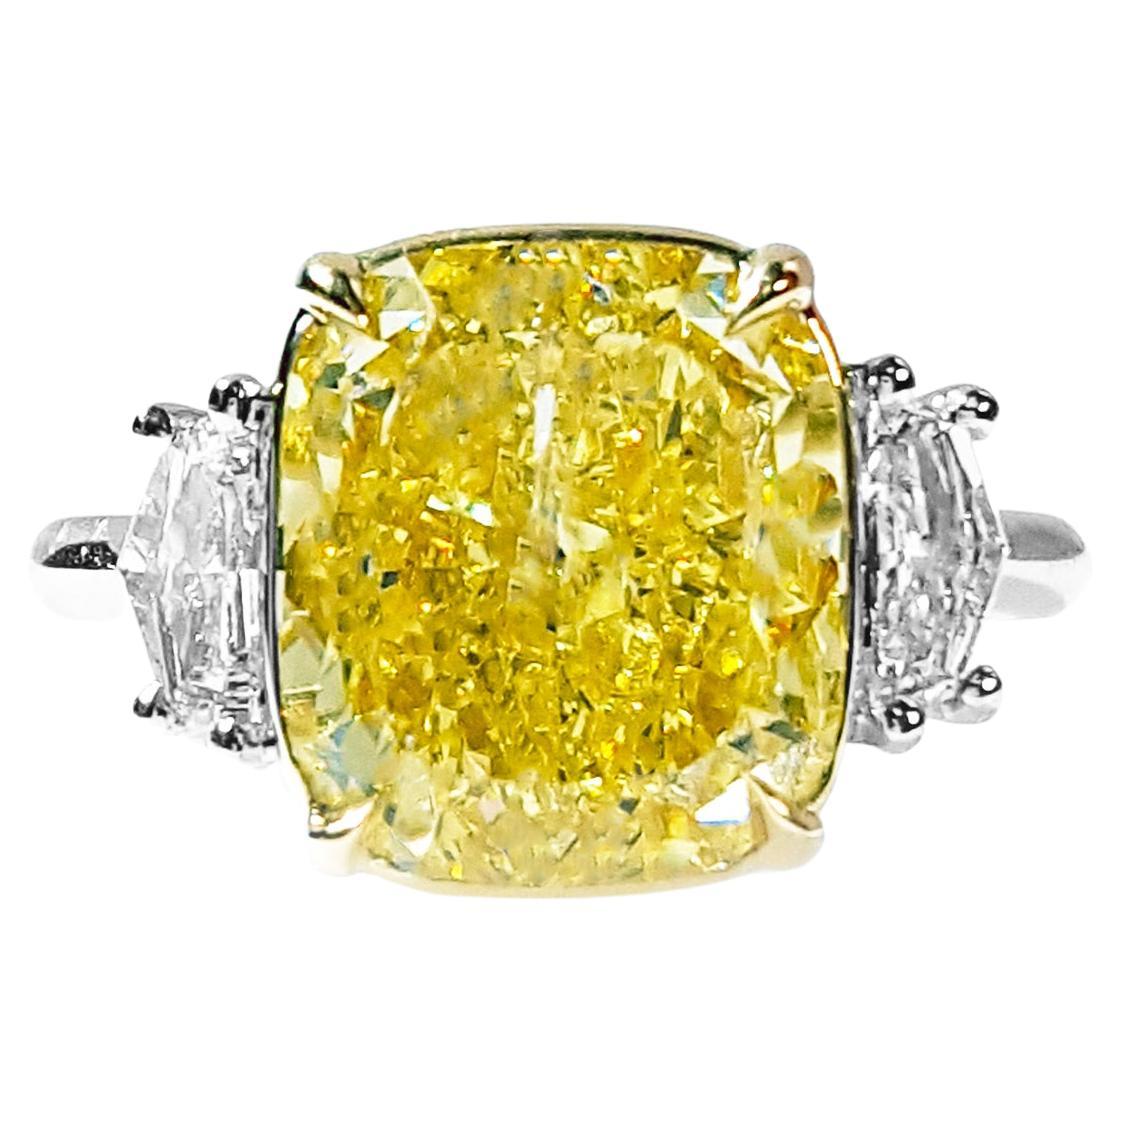 6.50 Carat Fancy Intense Yellow Diamond Engagement Ring in Platinum, GIA Report